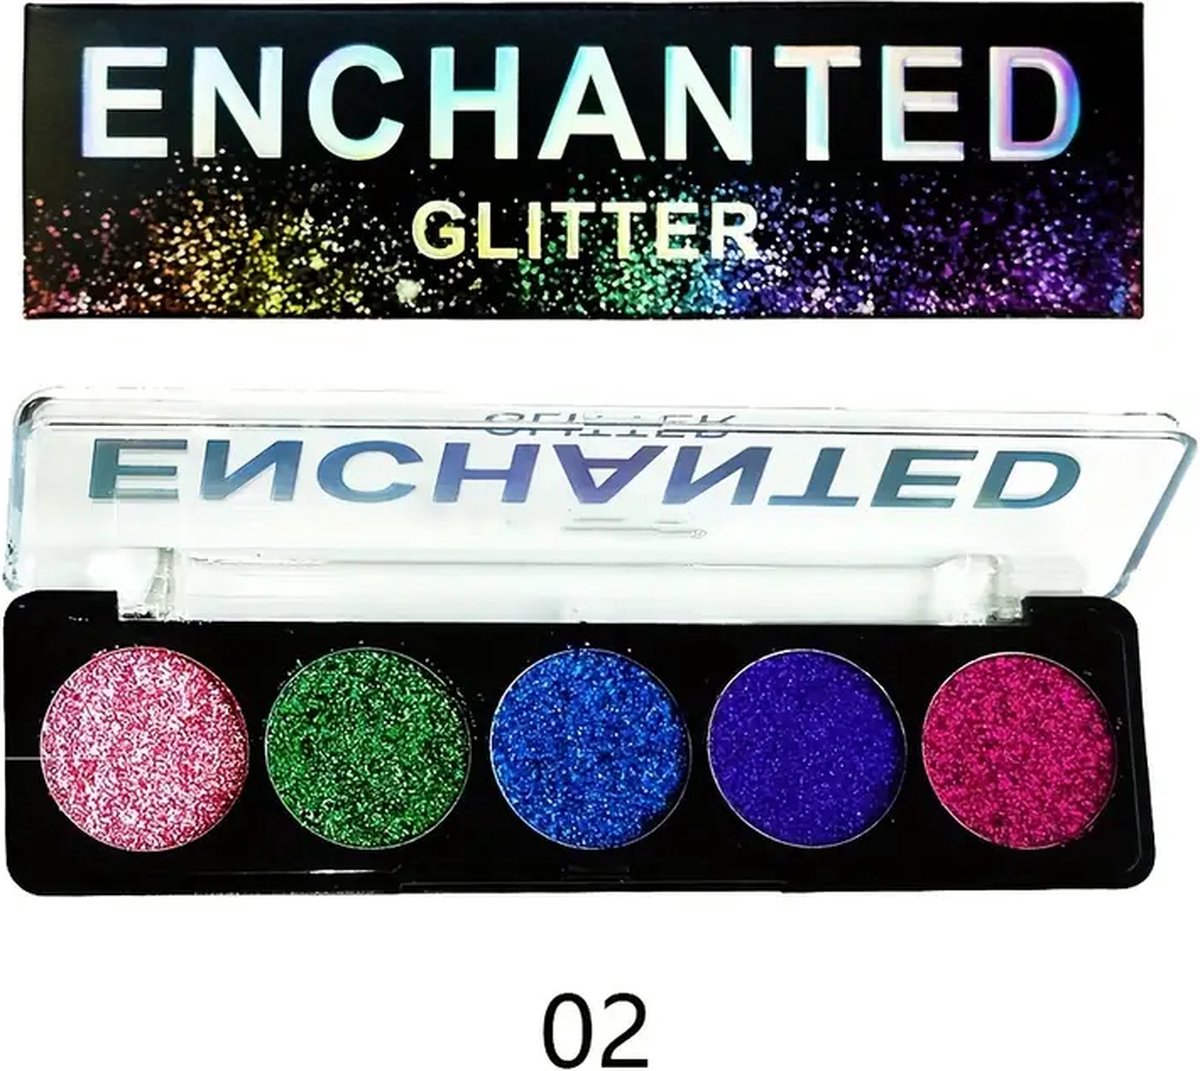 Enchanted glitter eyeshadow | Carnaval